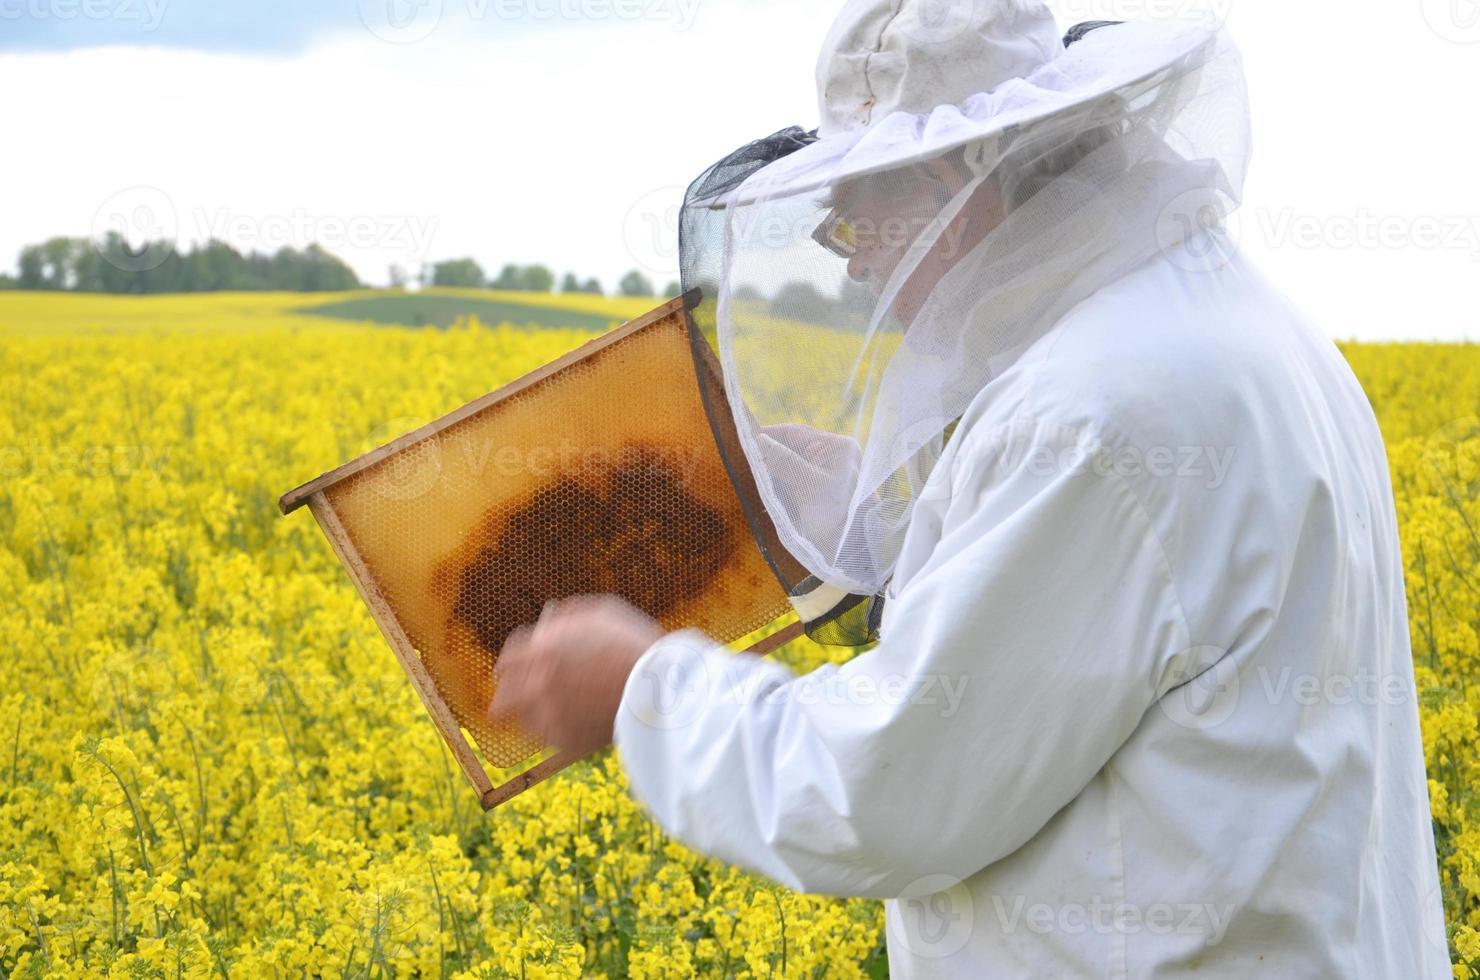 ervaren senior apiarist werkzaam in het bloeiende koolzaadveld foto